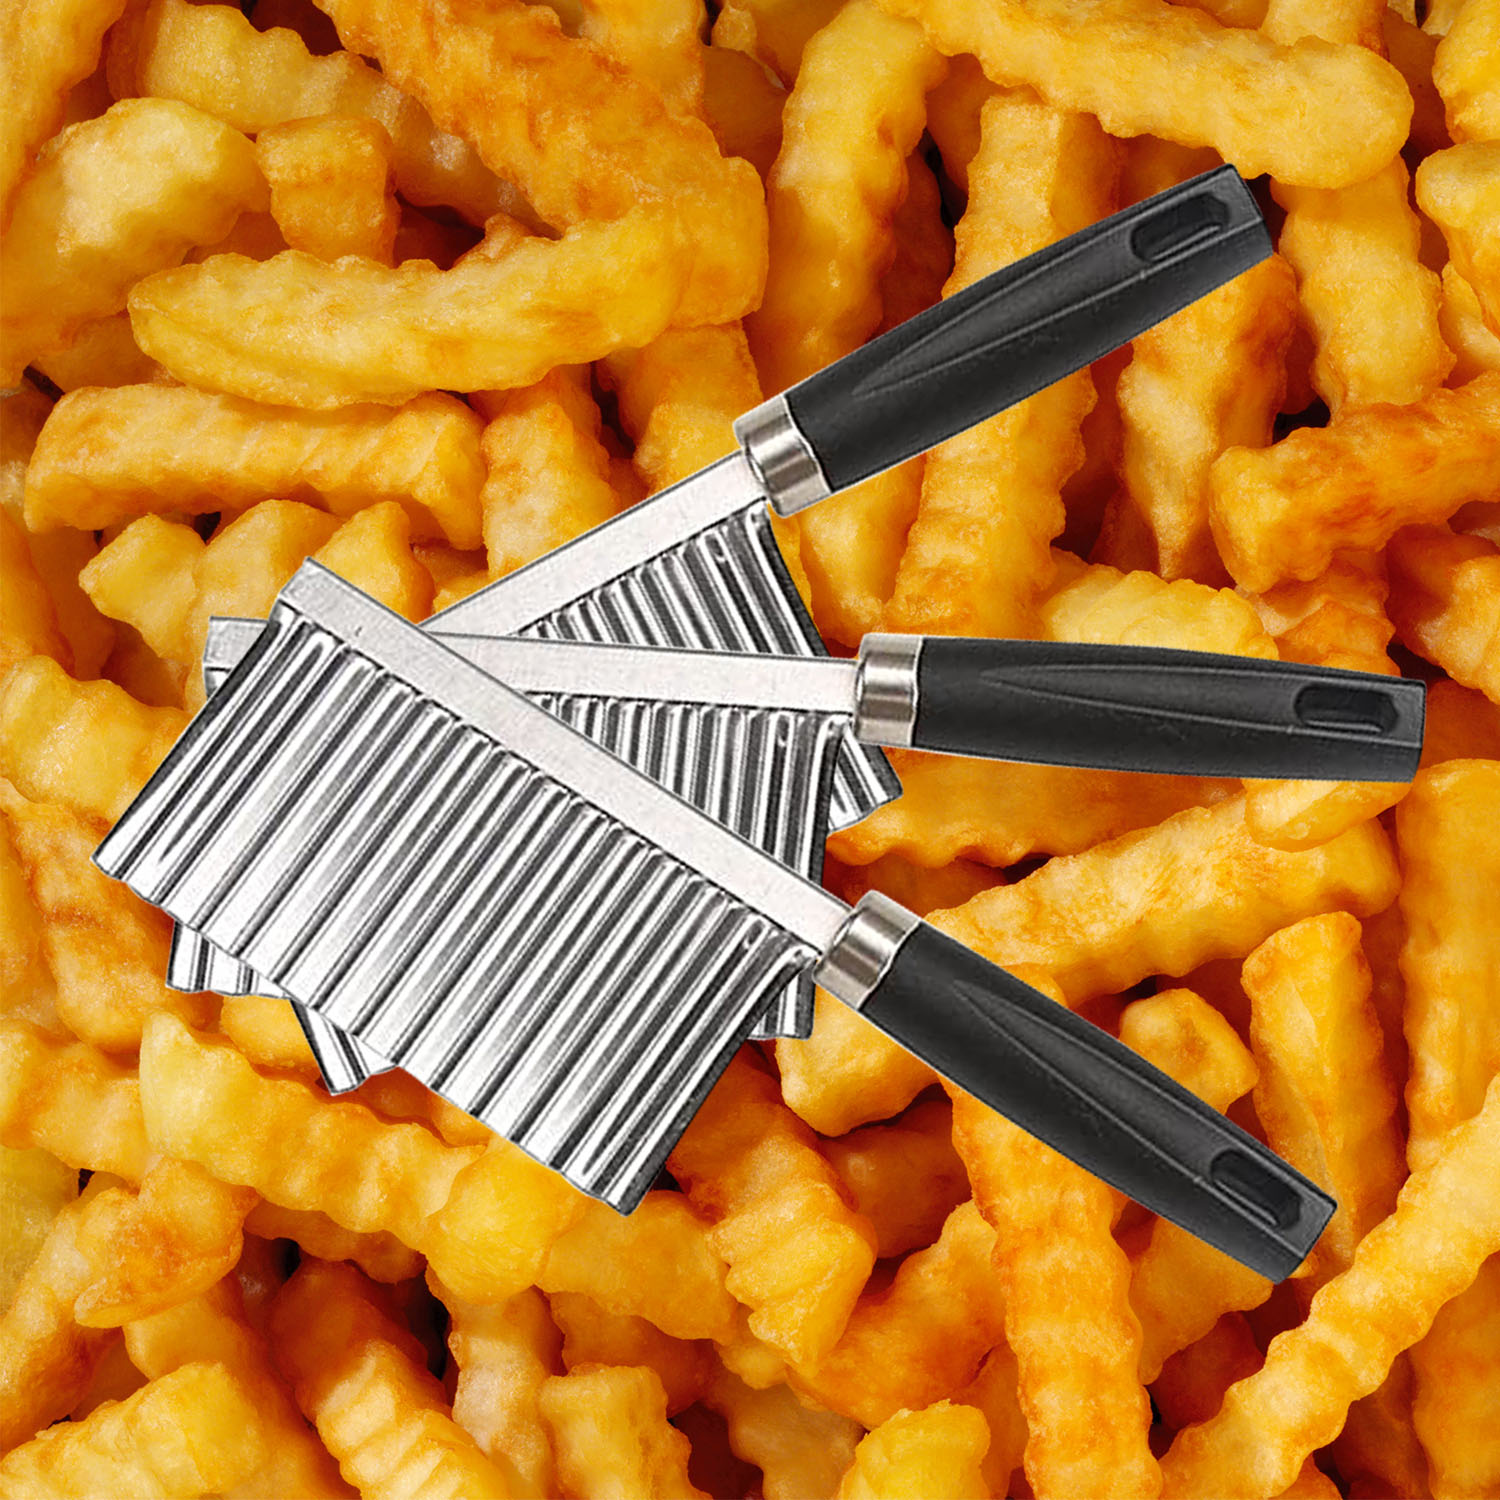 Cuchillo cortador para freír francés arrugado, patatas fritas de zanahoria, verduras, utensilios de cocina para freír francés, cuchillo ondulado multifuncional de acero inoxidable